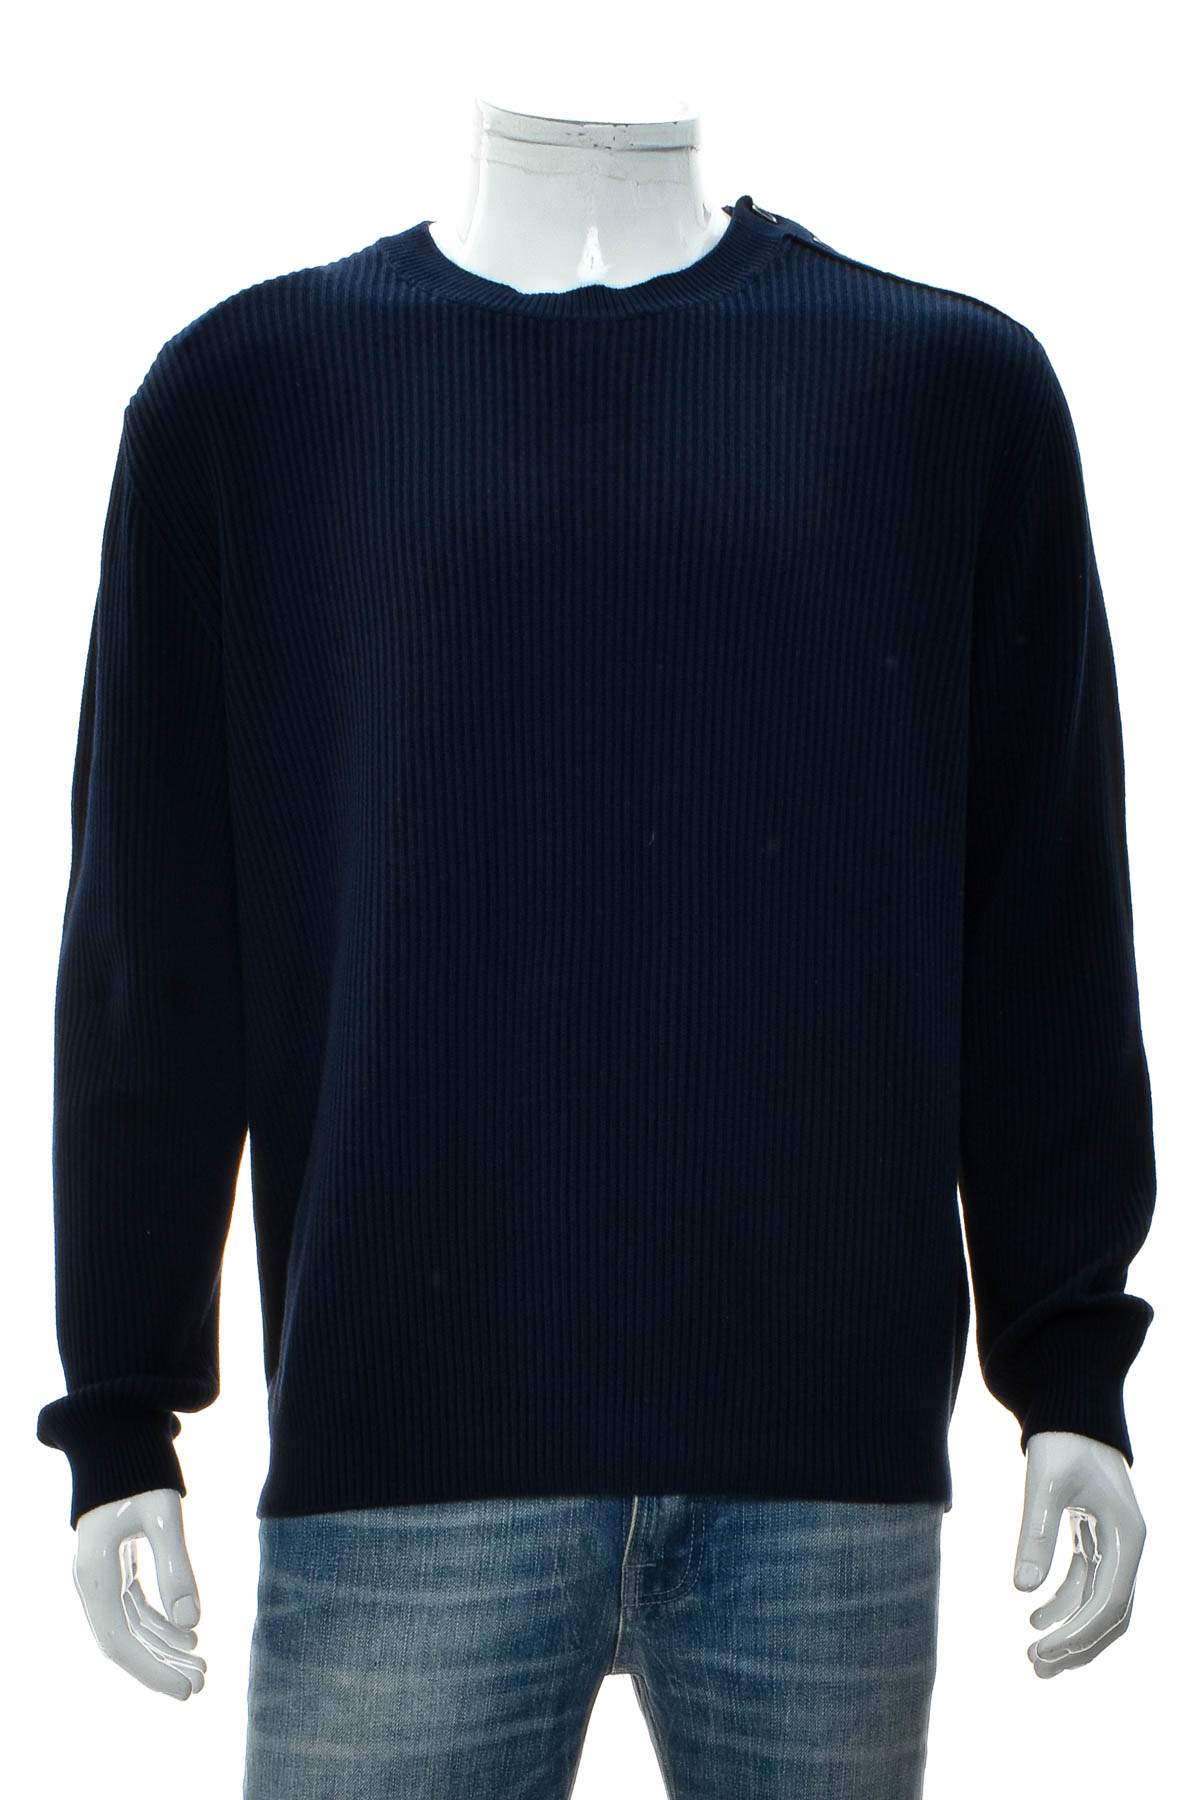 Men's sweater - United Colors of Benetton - 0